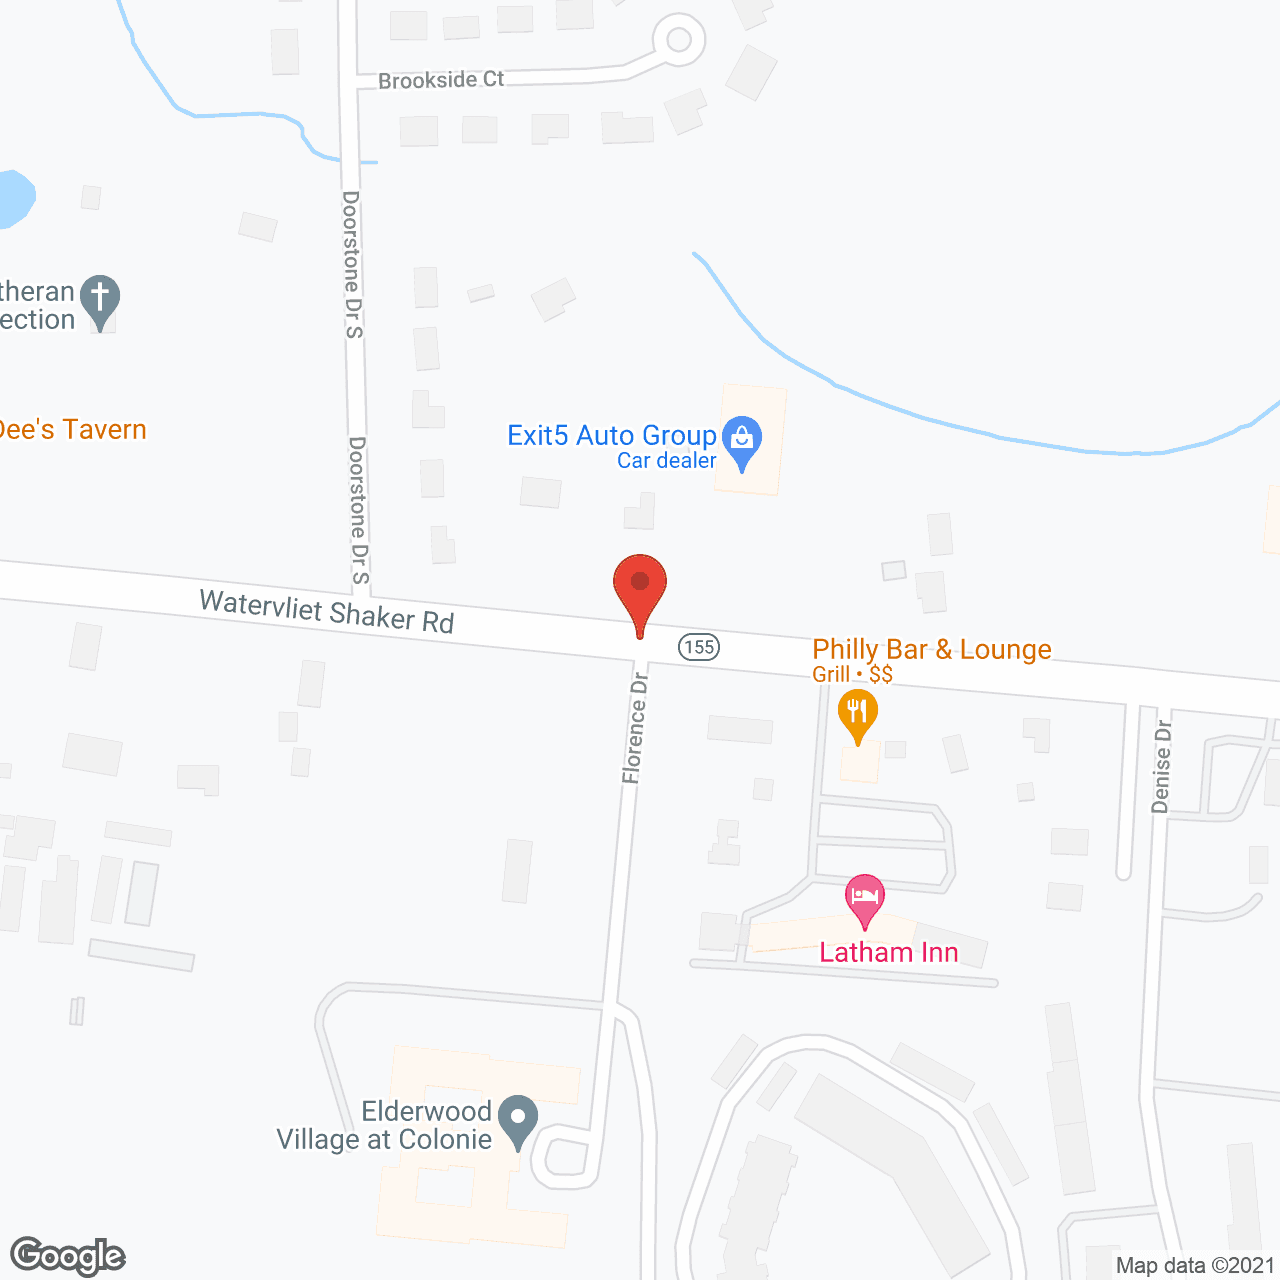 Elderwood Village at Colonie in google map